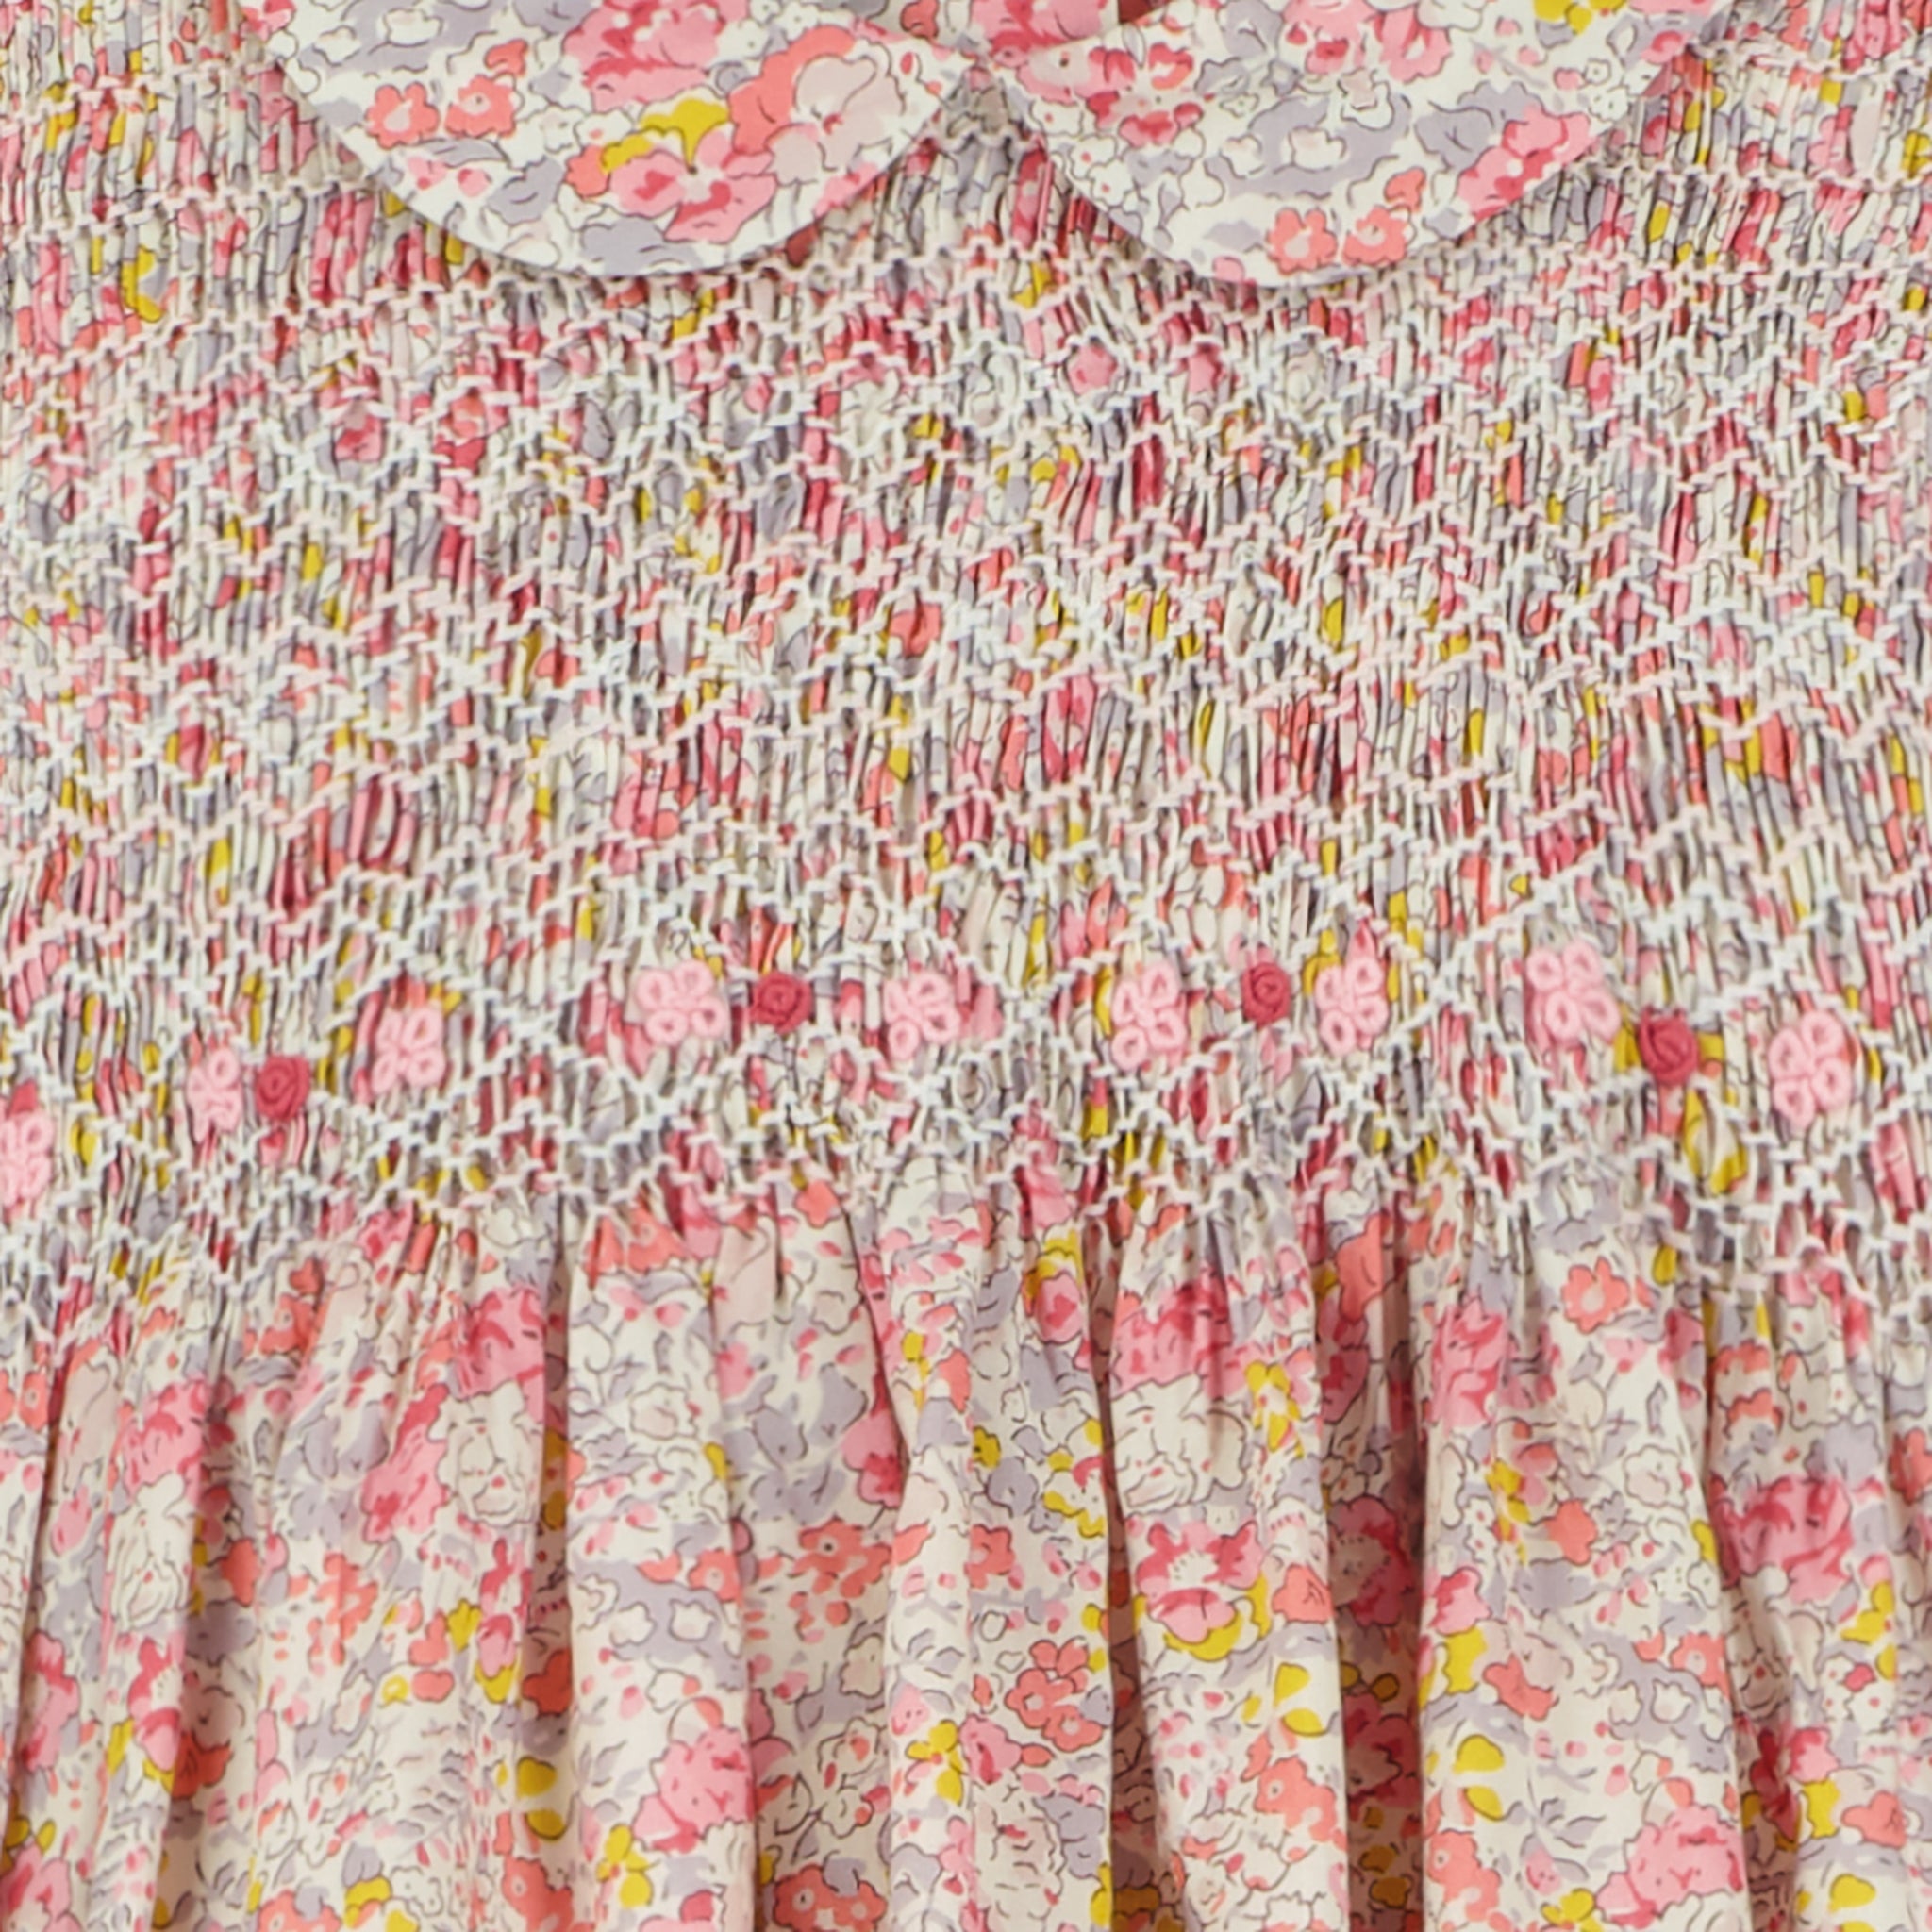 Made with Liberty Fabric: Baby Dress - Alyssa